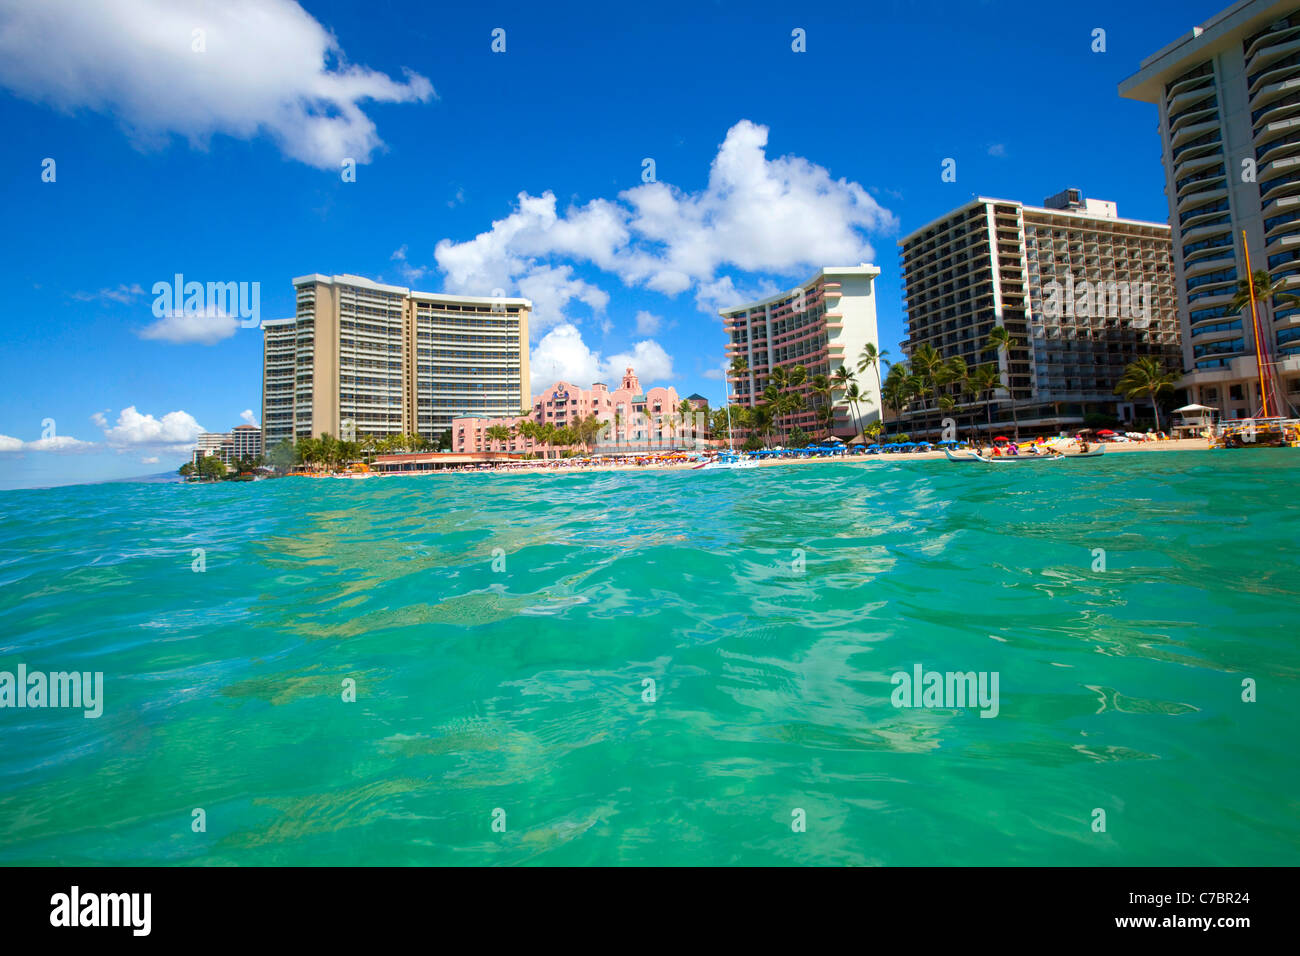 La plage de Waikiki, Honolulu, Oahu, Hawaii Banque D'Images